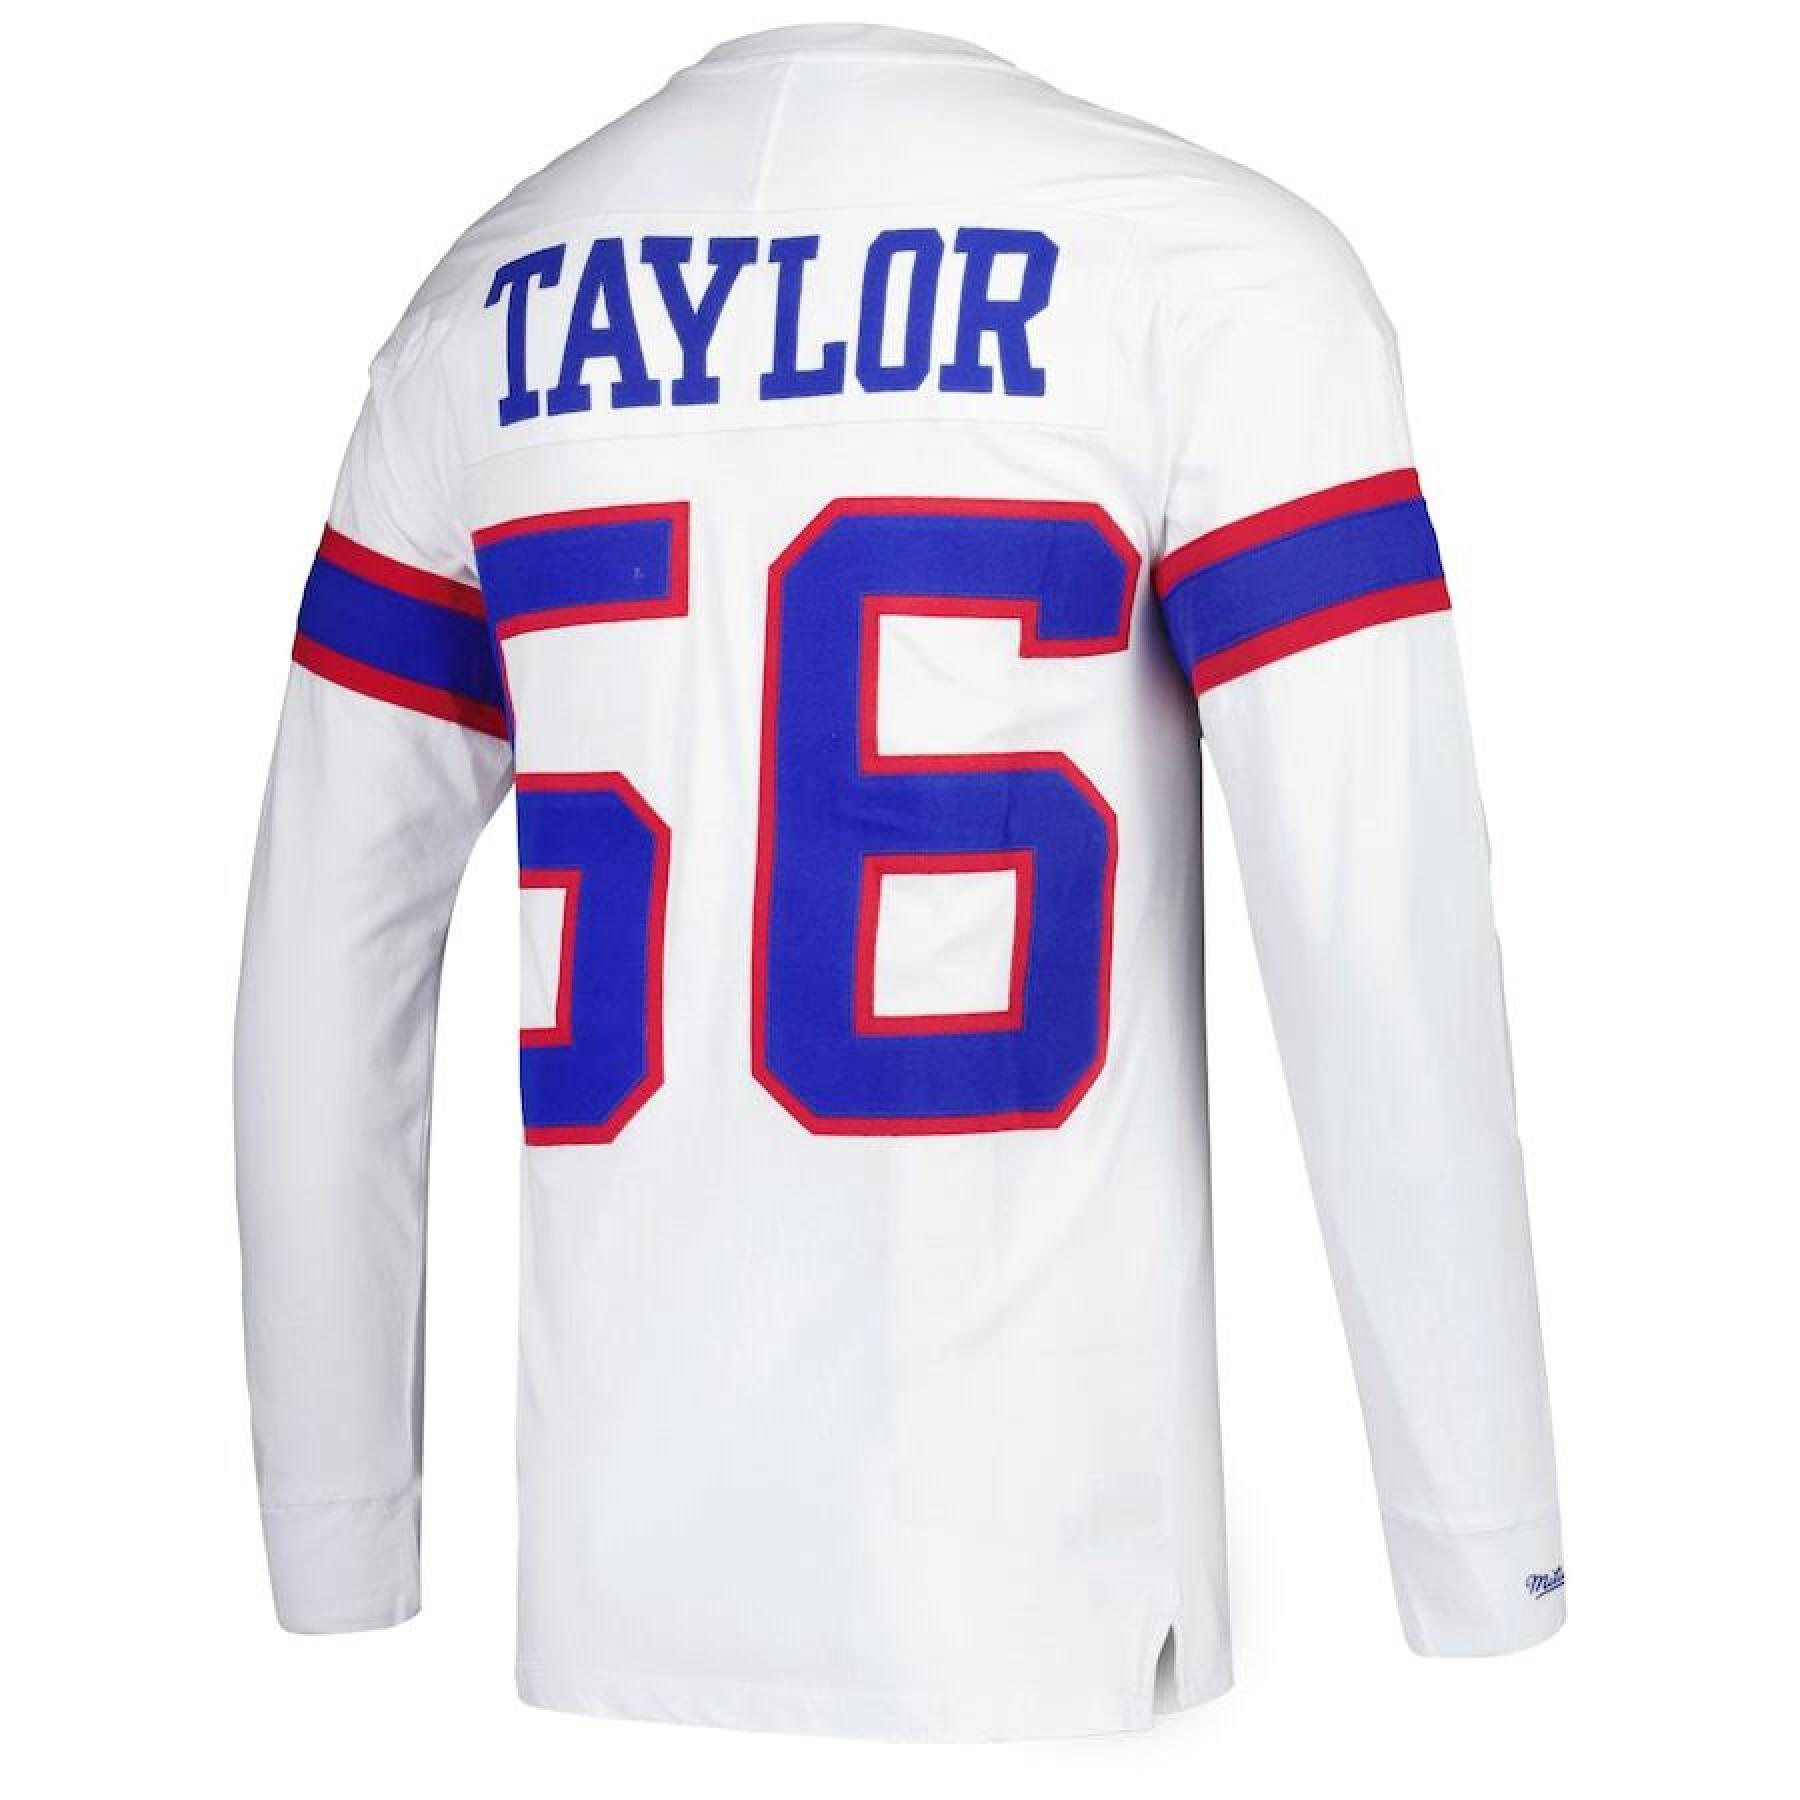 Long sleeve T-shirt New York Giants NFL N&N 1986 Lawrence Taylor